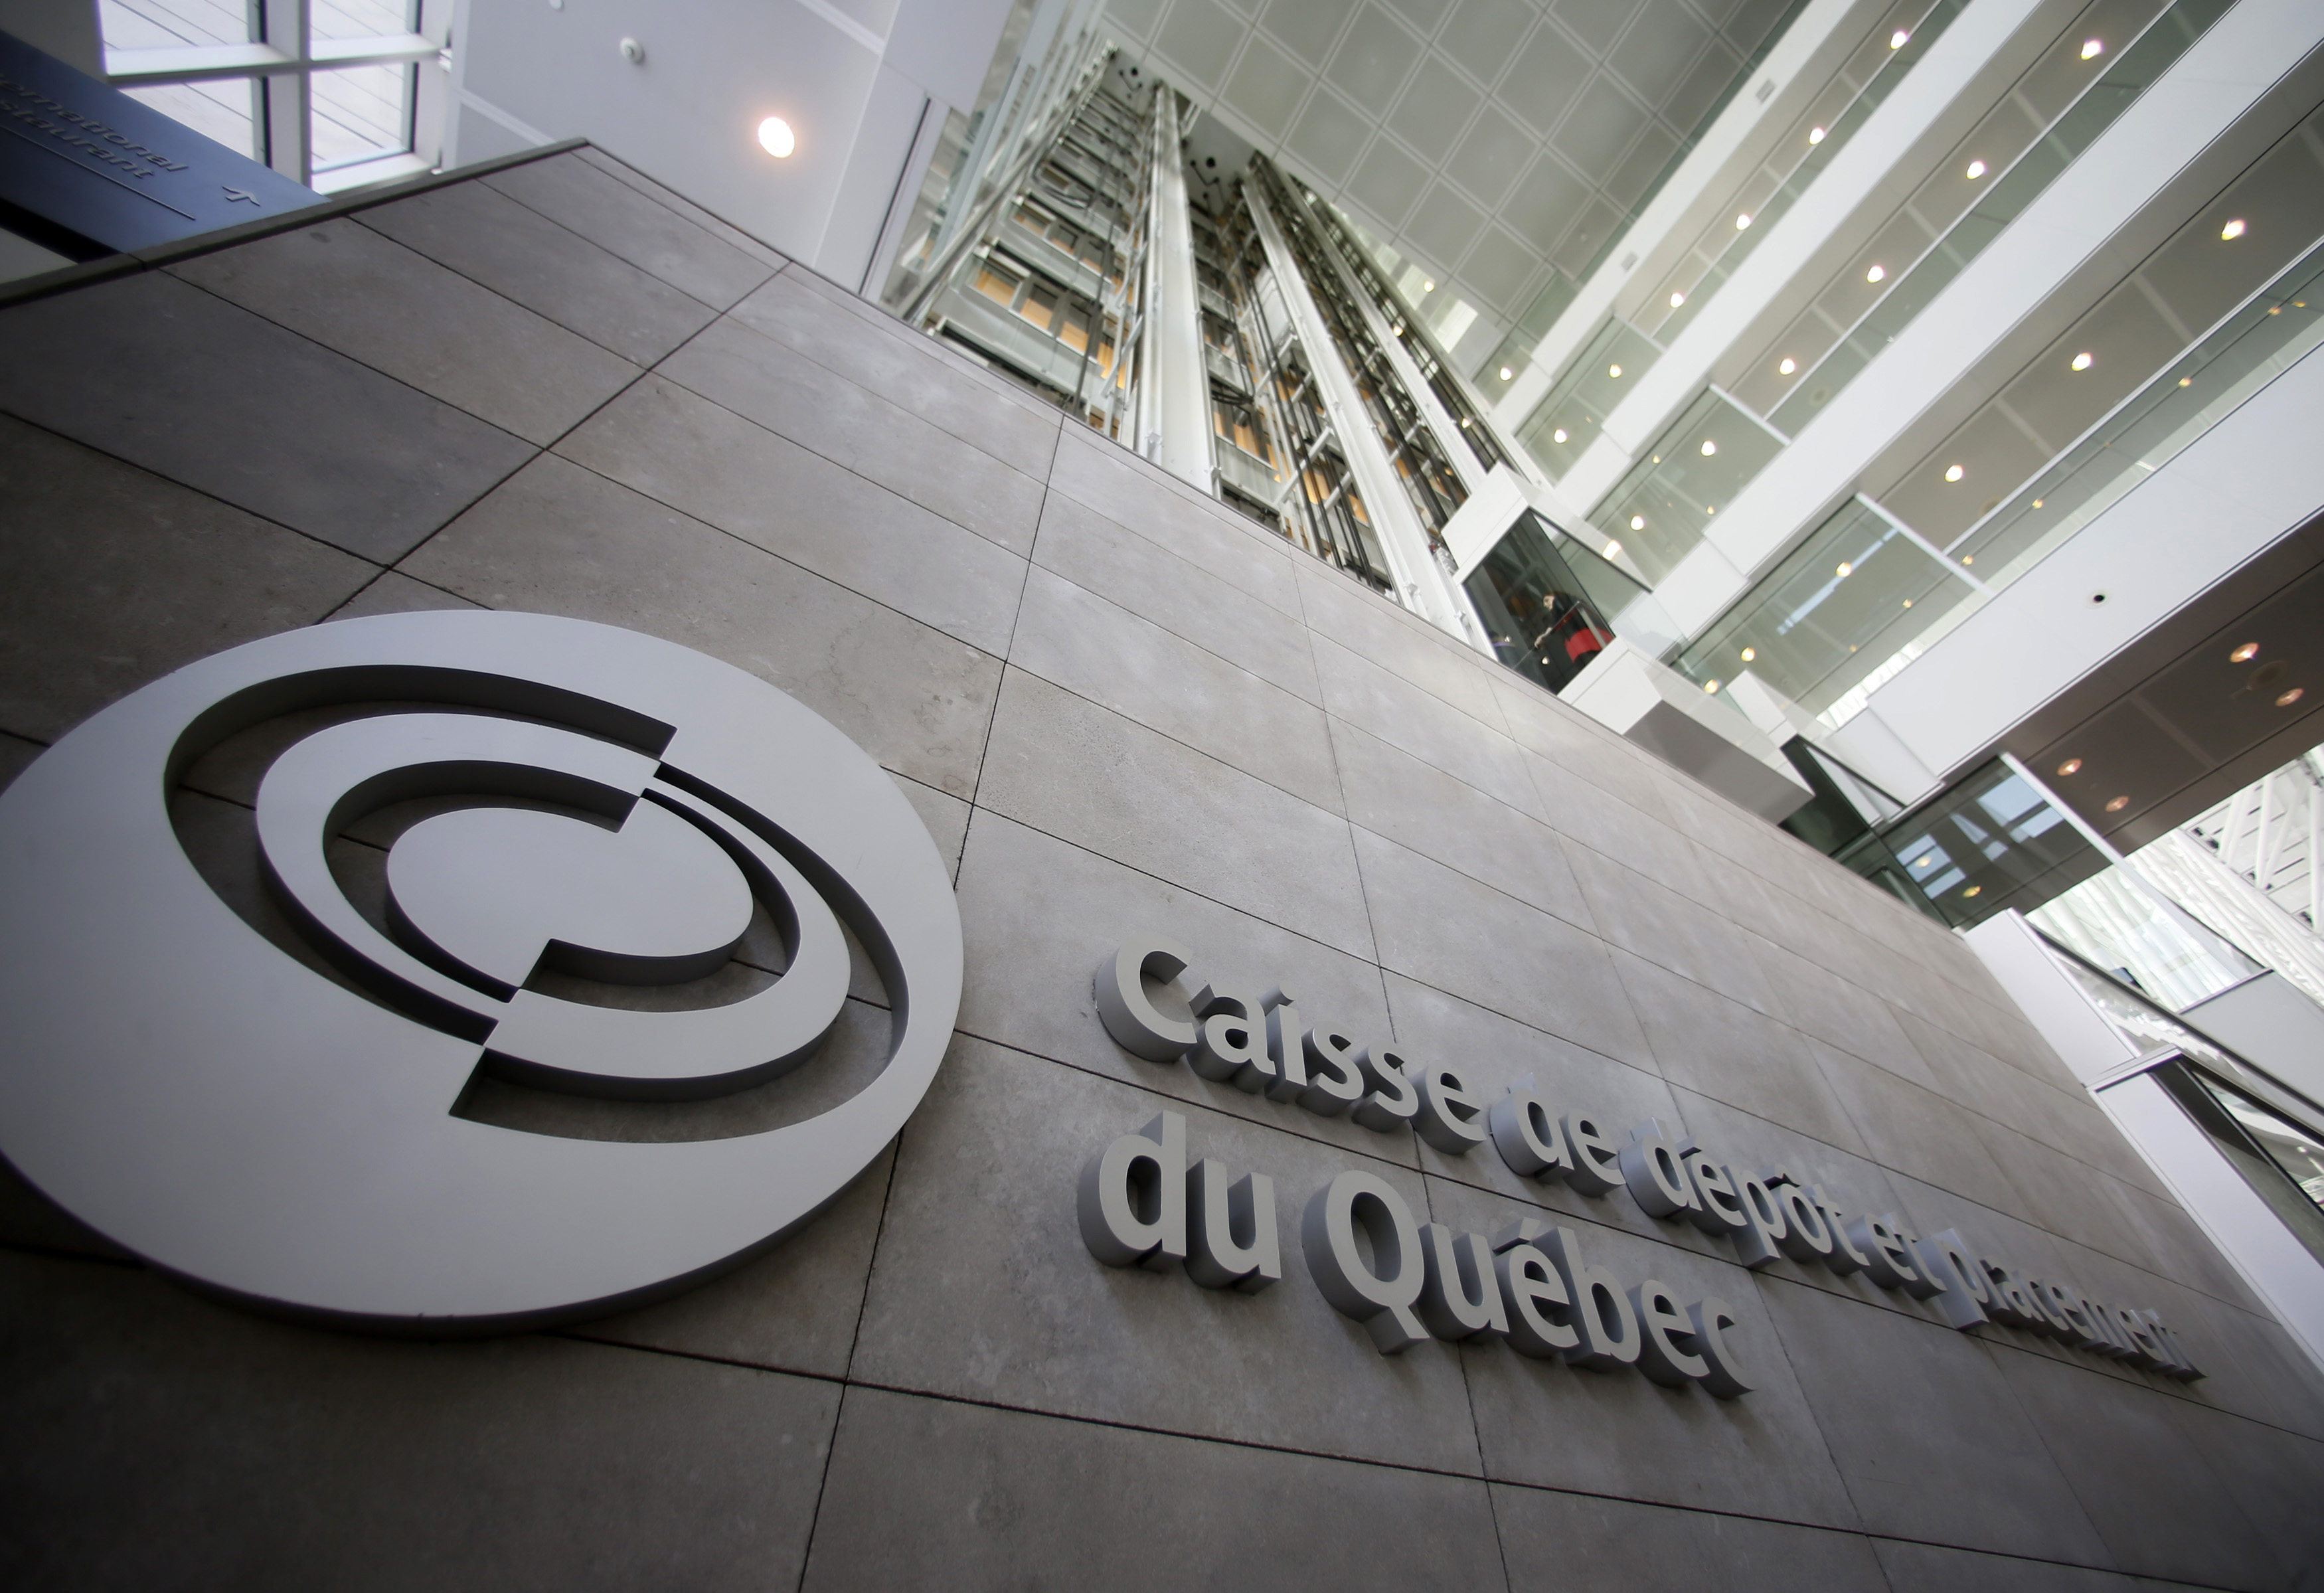 The Caisse de depot et placement du Quebec (CDP) building is seen in Montreal, February 26, 2014. REUTERS/Christinne Muschi 